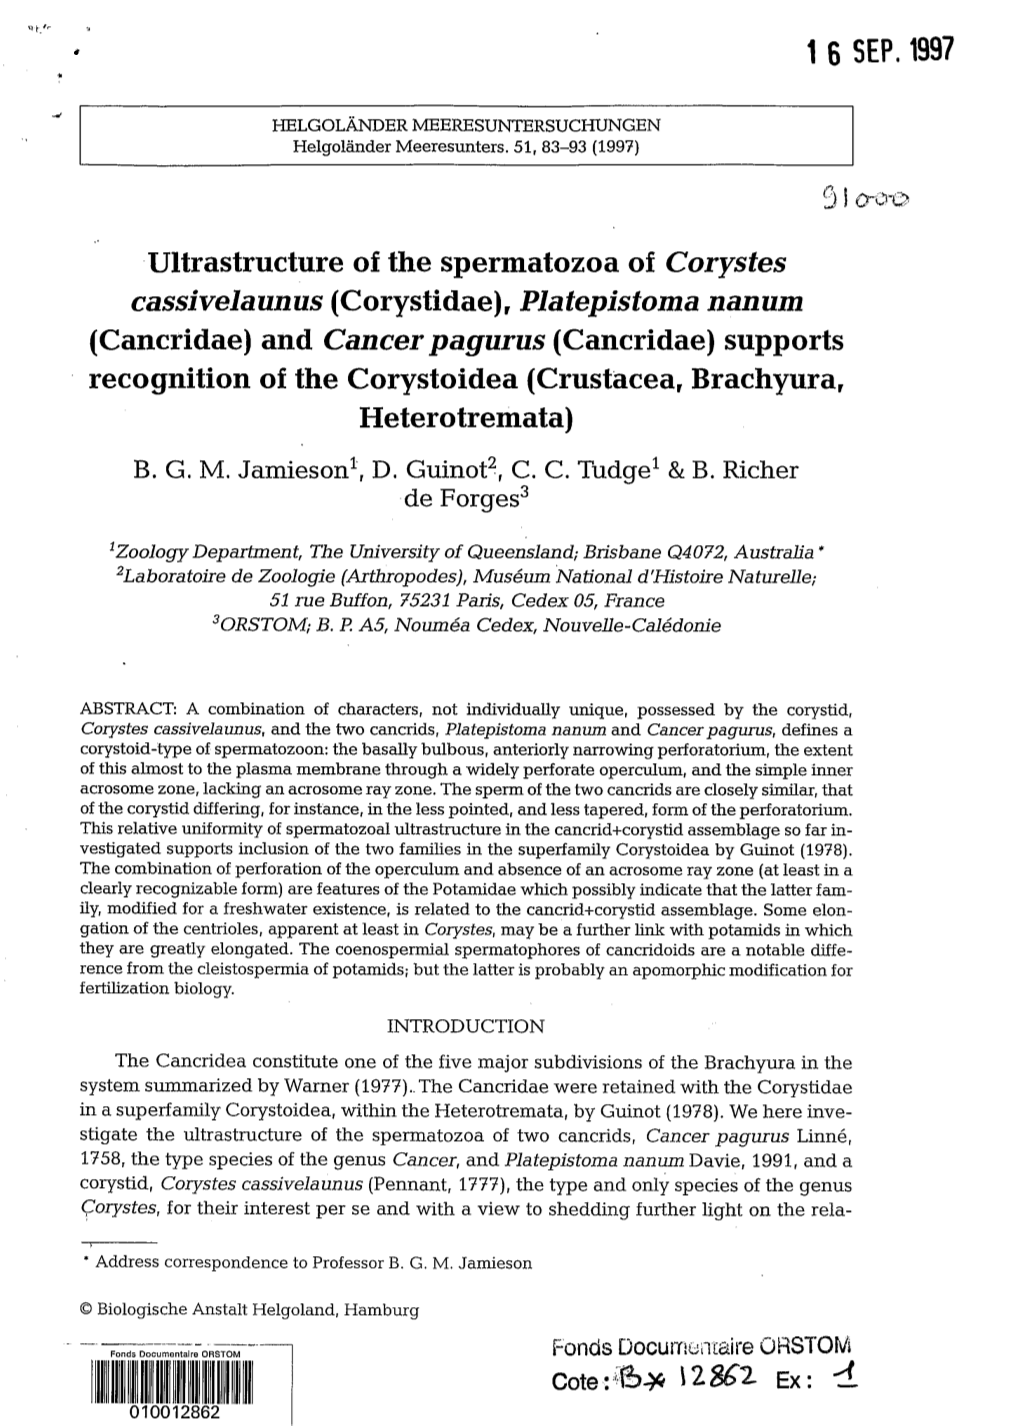 Ultrastructure of the Spermatozoa of Corystes Cassivelaunus (Corystidae